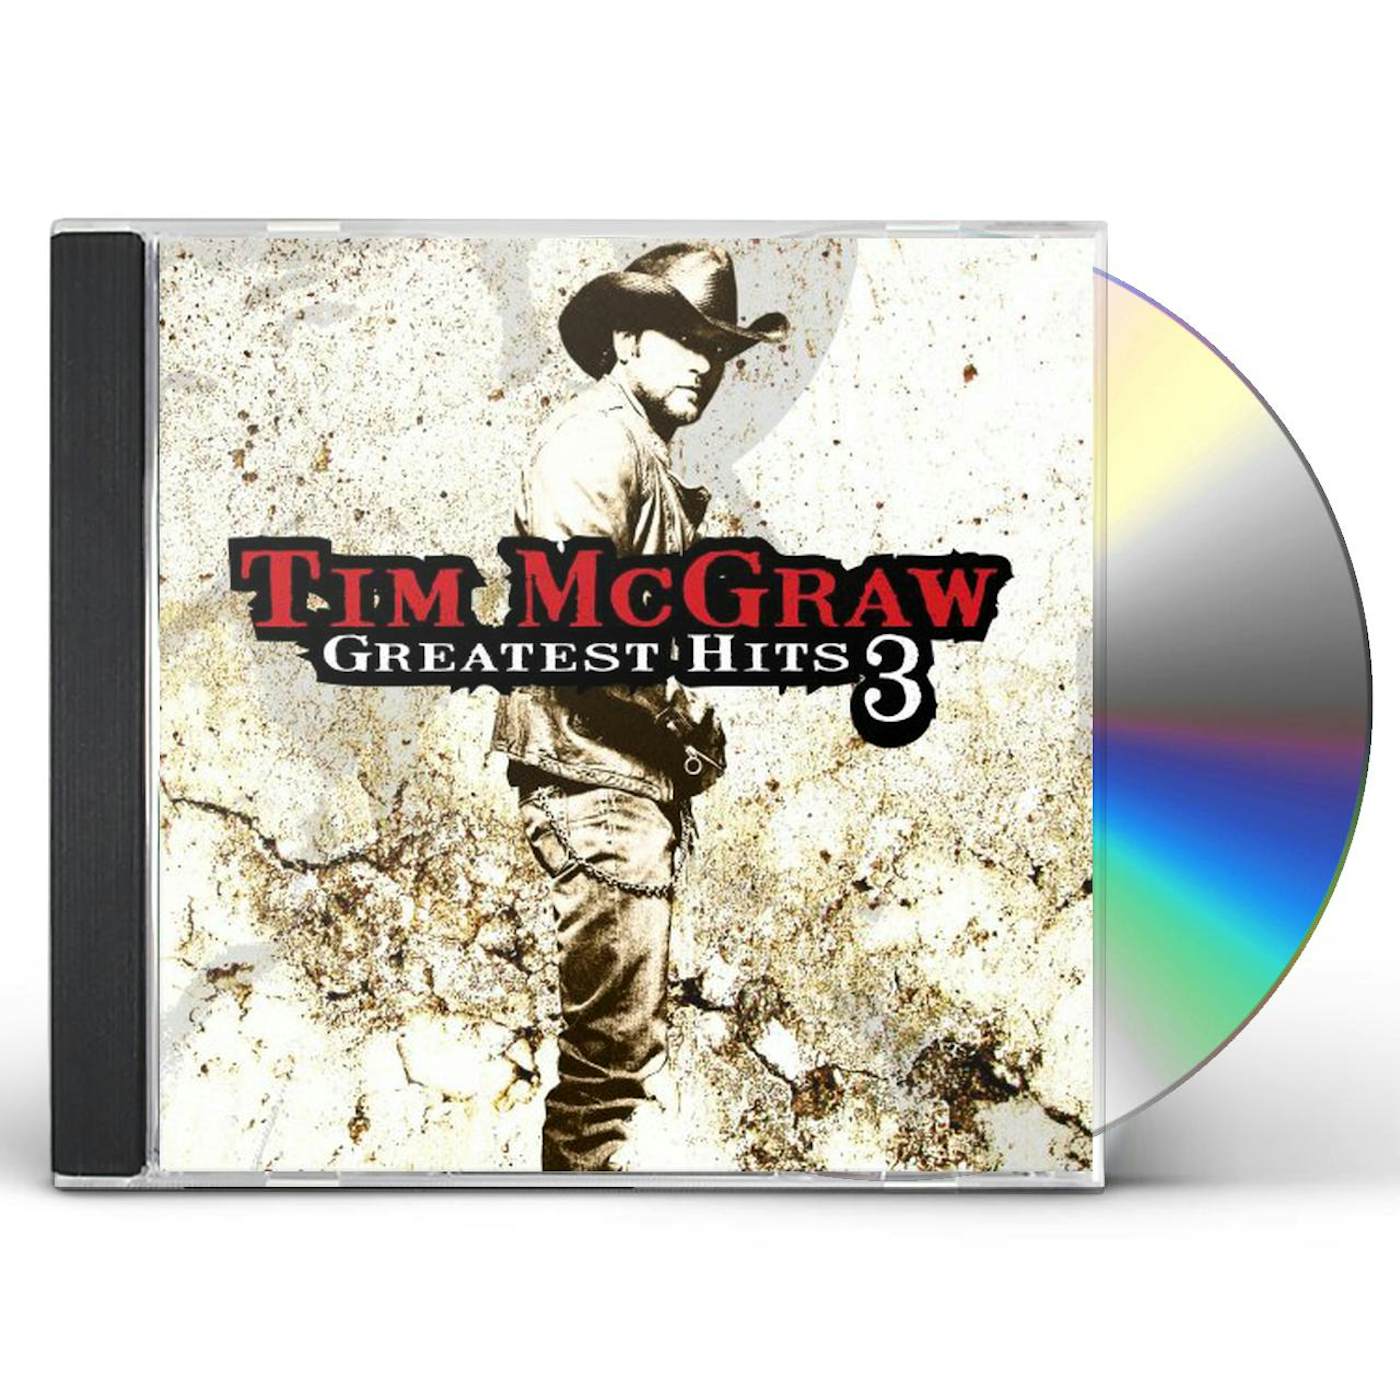 Tim McGraw GREATEST HITS 3 CD